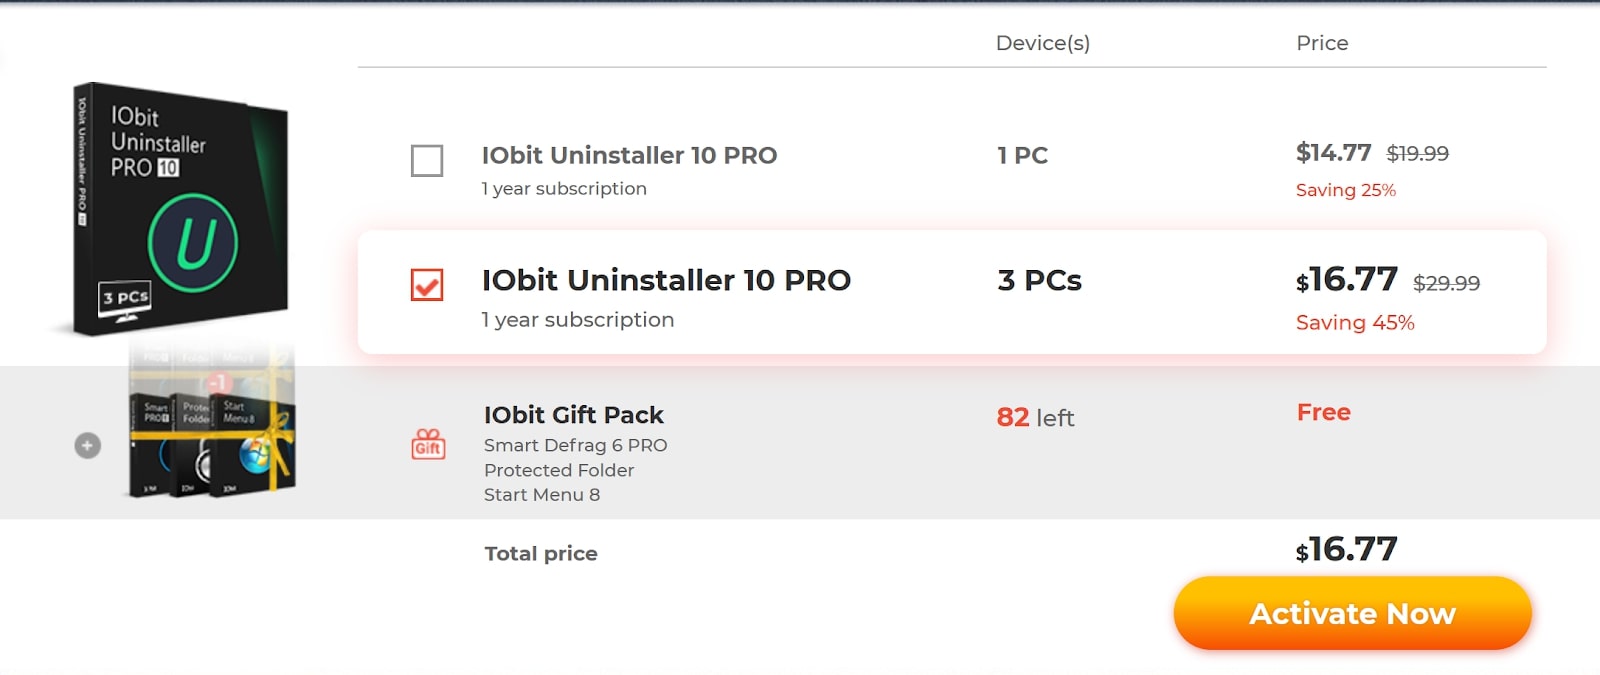 IObit Uninstaller Pro 13.0.0.13 download the last version for apple